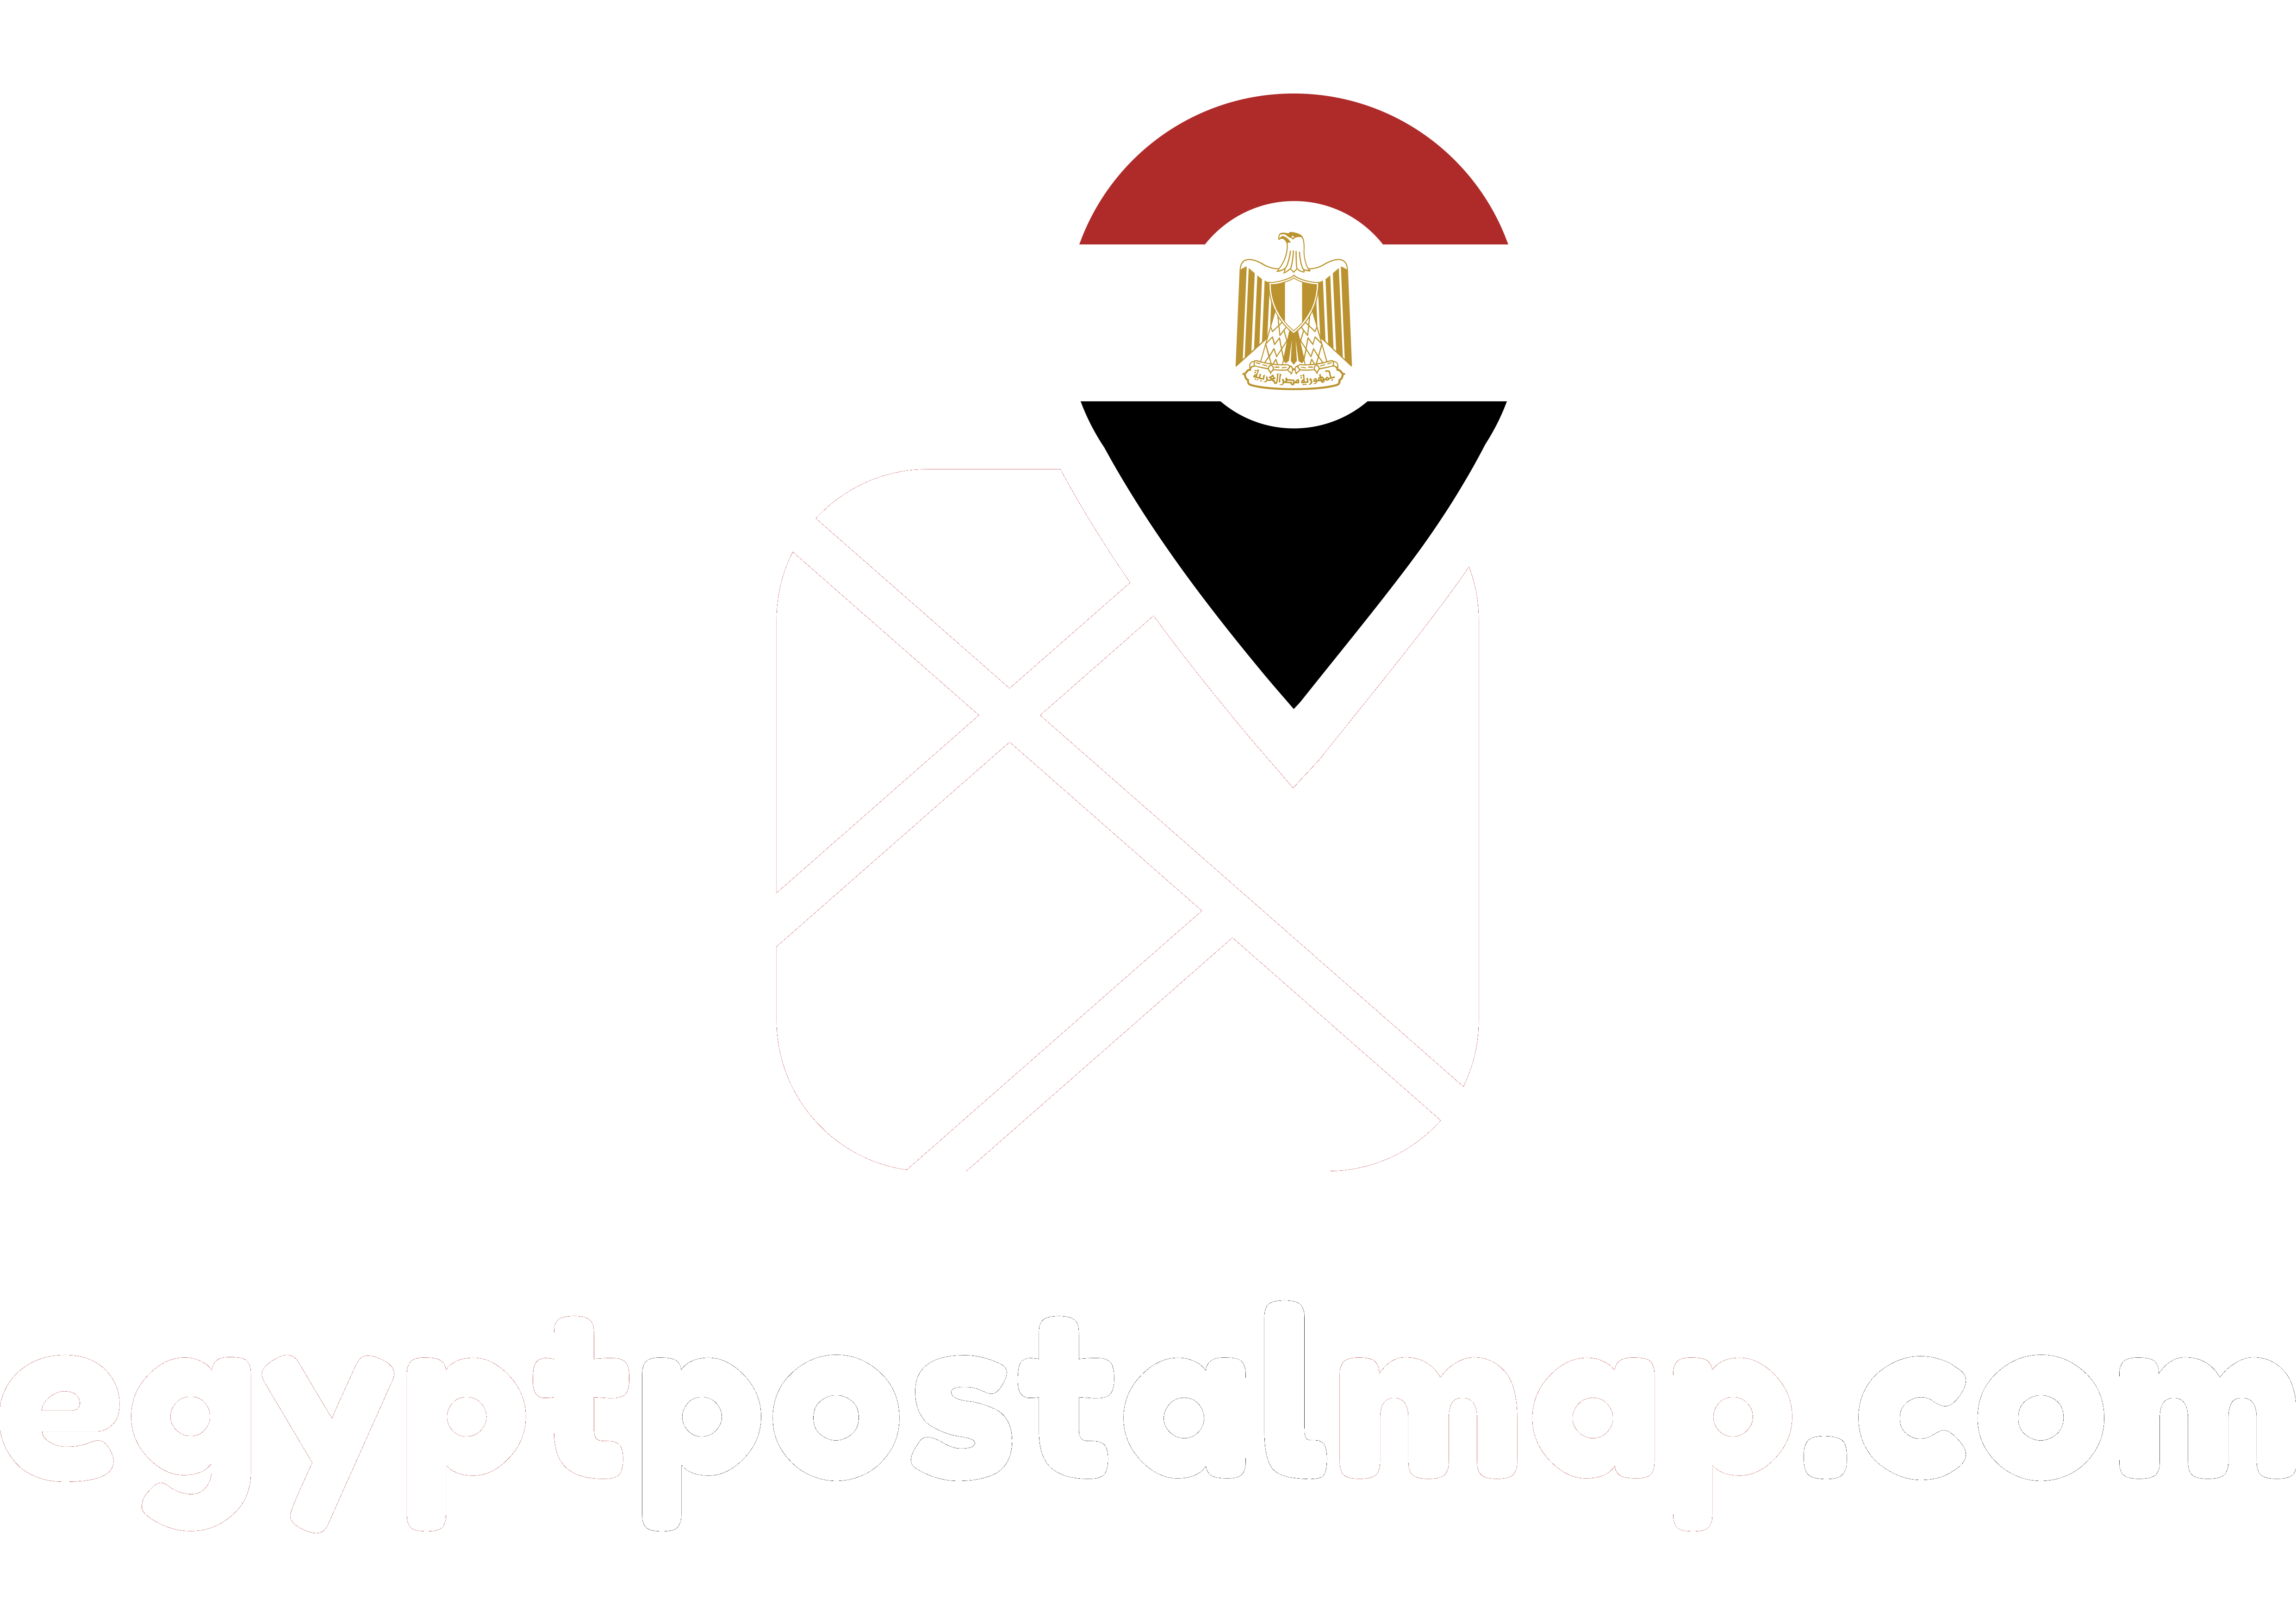 EgyptPostalMap Logo